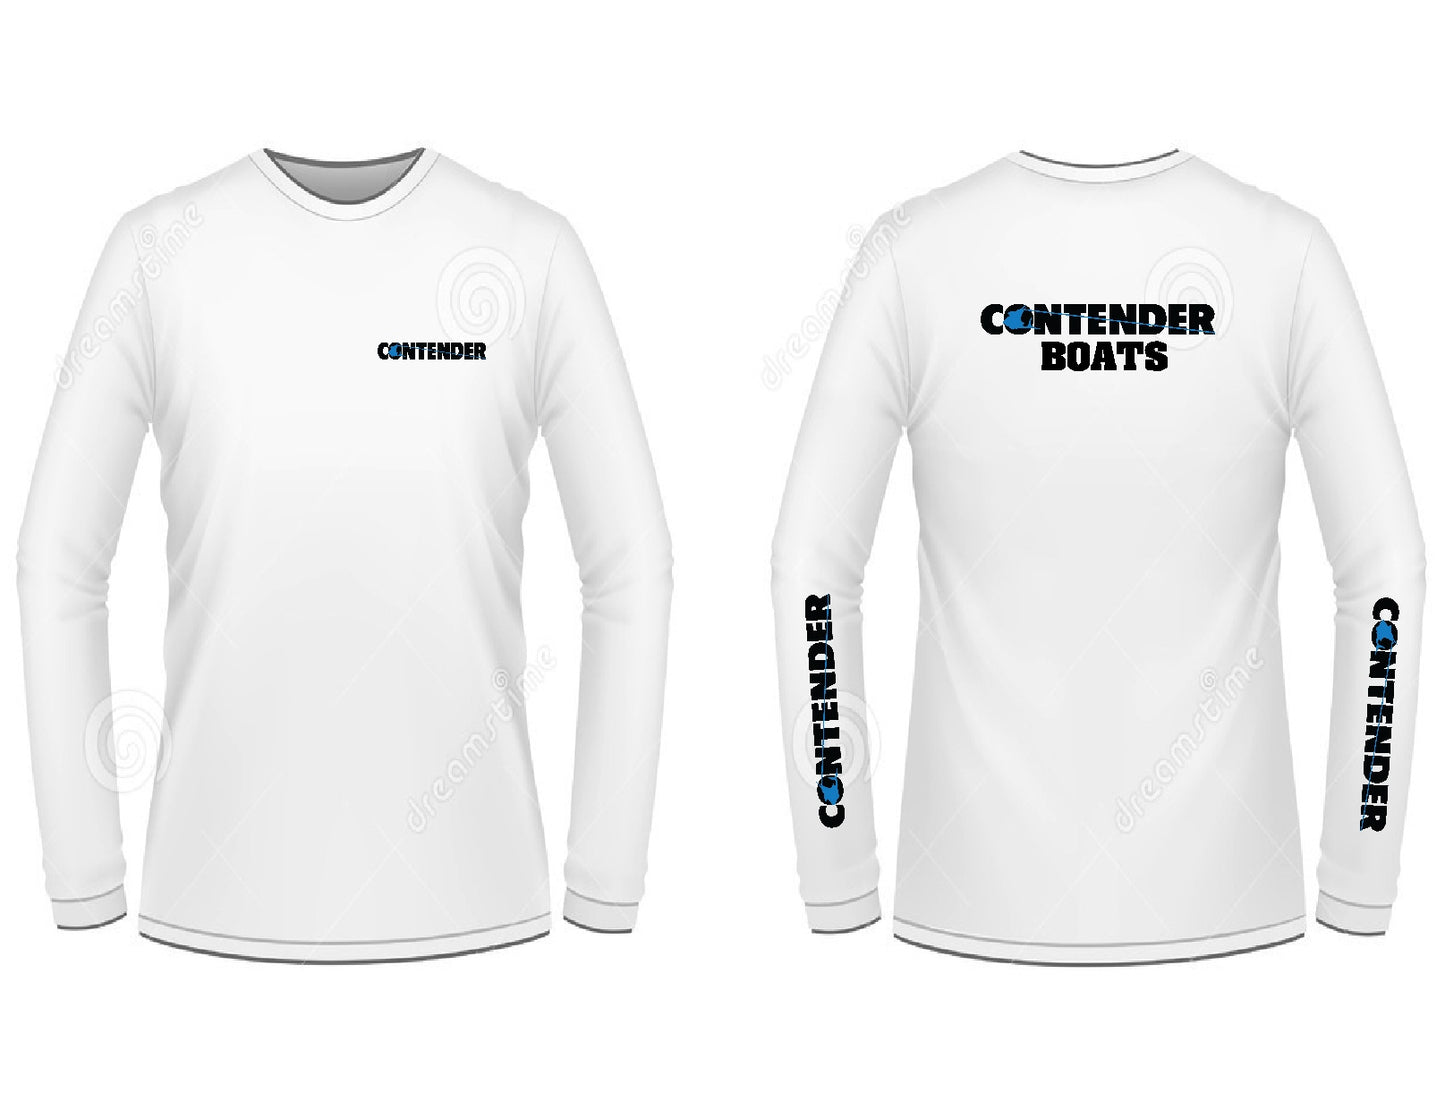 Contender Boats Long Sleeve T-Shirt